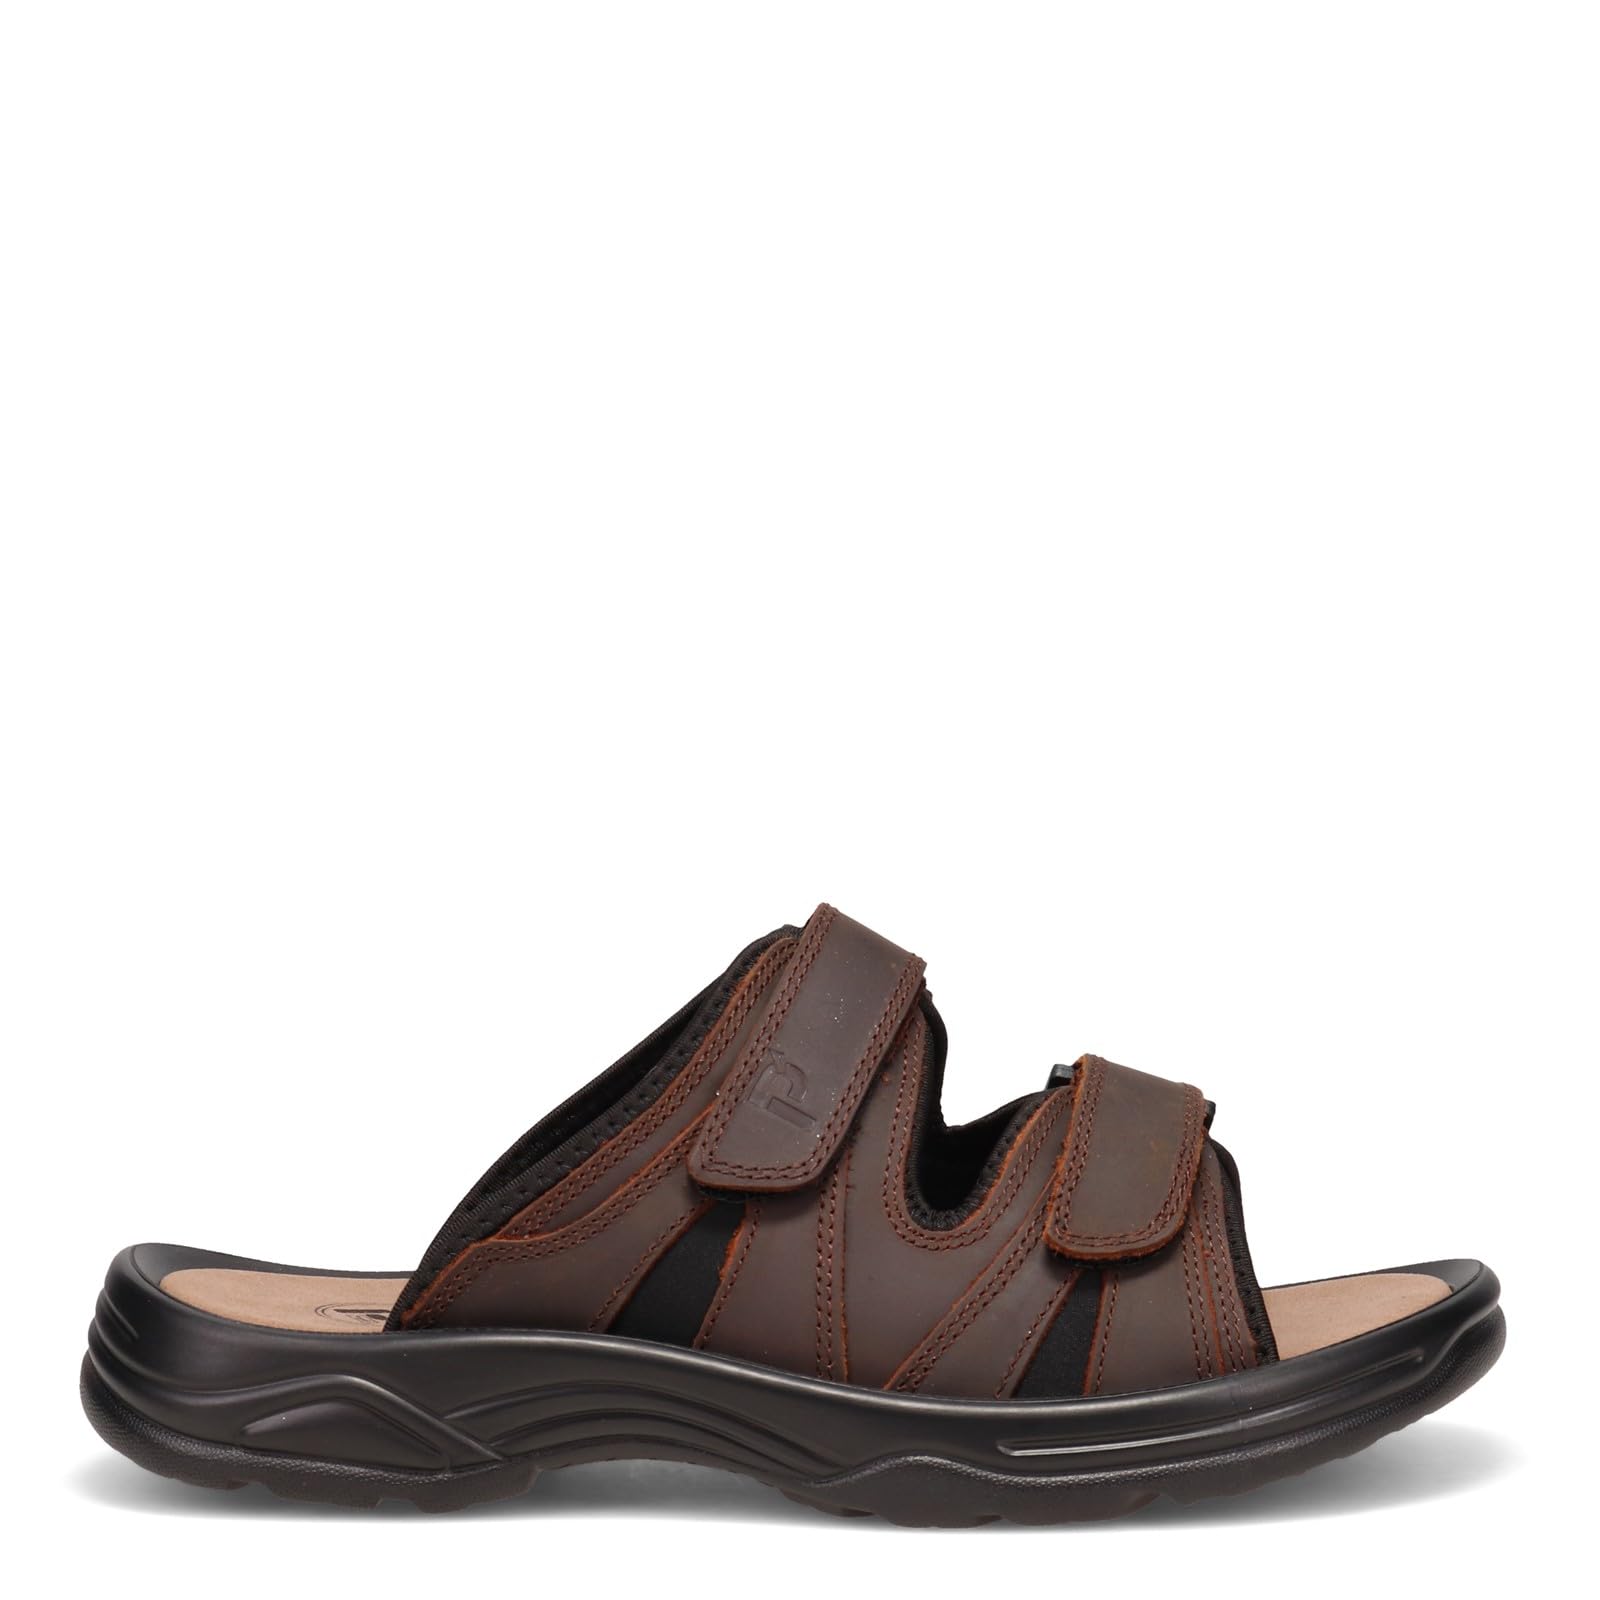 Propet Mens Vero Slide Athletic Sandals Casual - Brown